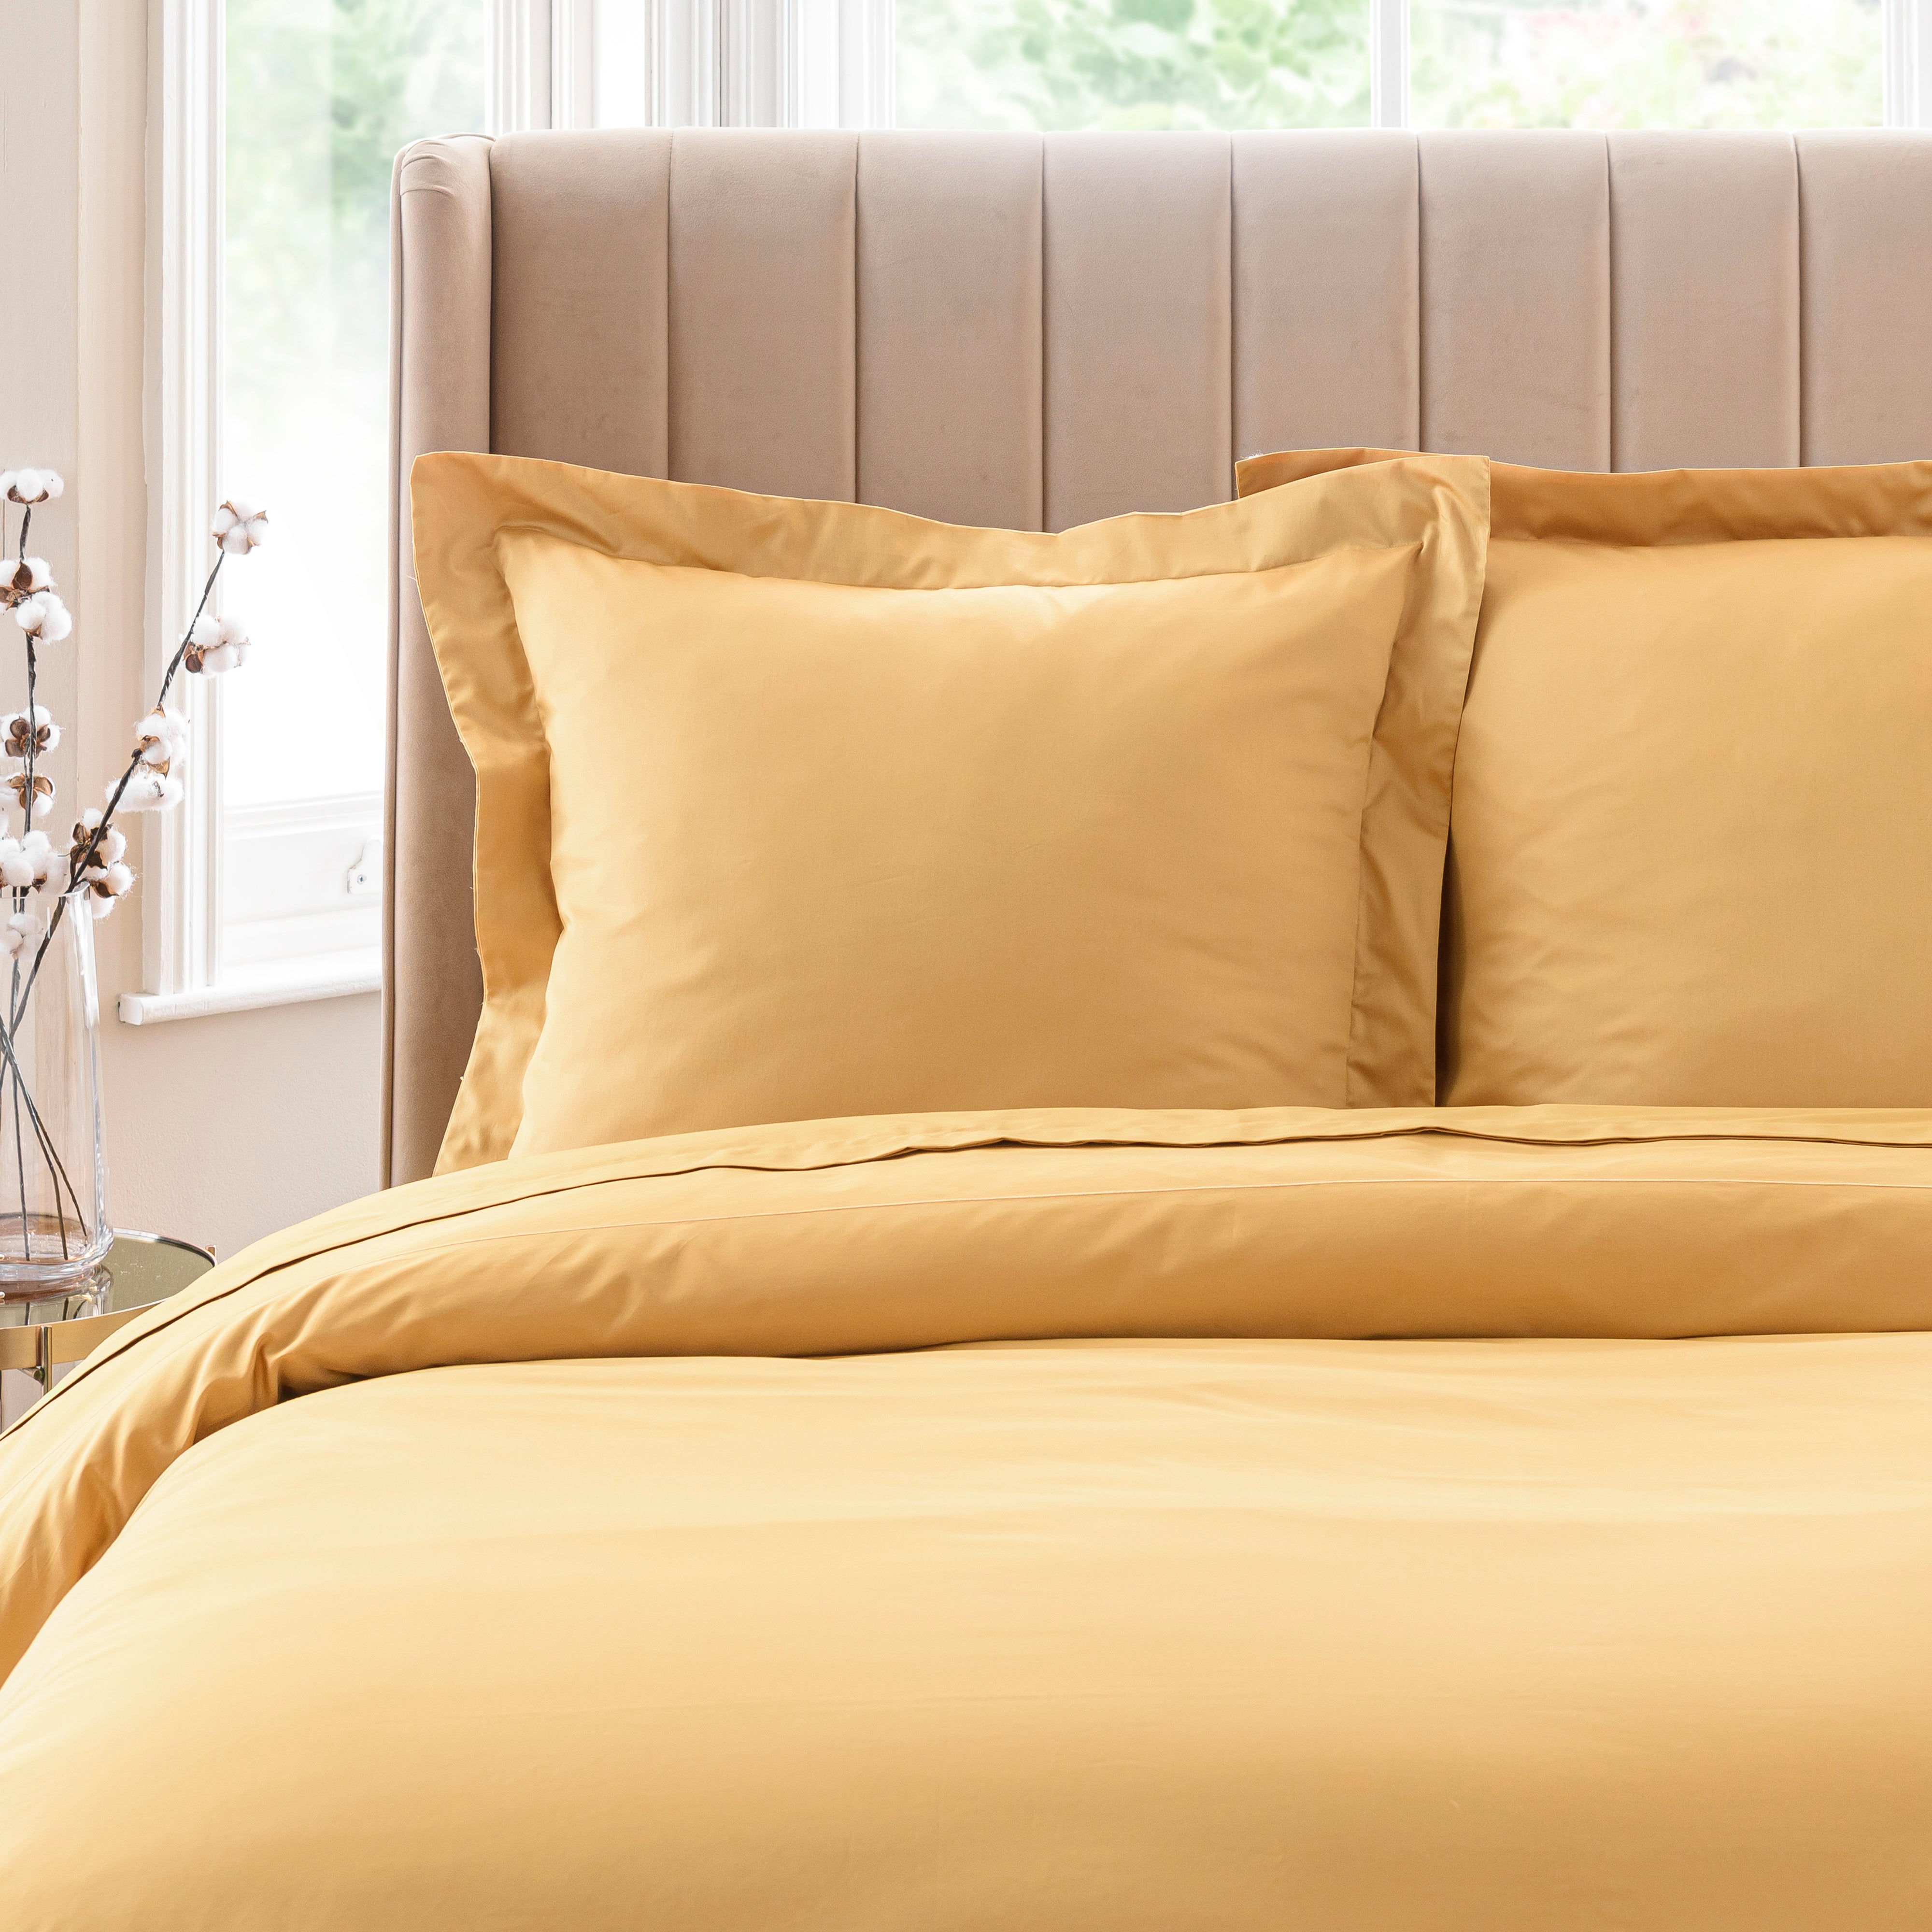 Dorma 300 Thread Count 100 Cotton Sateen Plain Continental Square Pillowcase Yellow